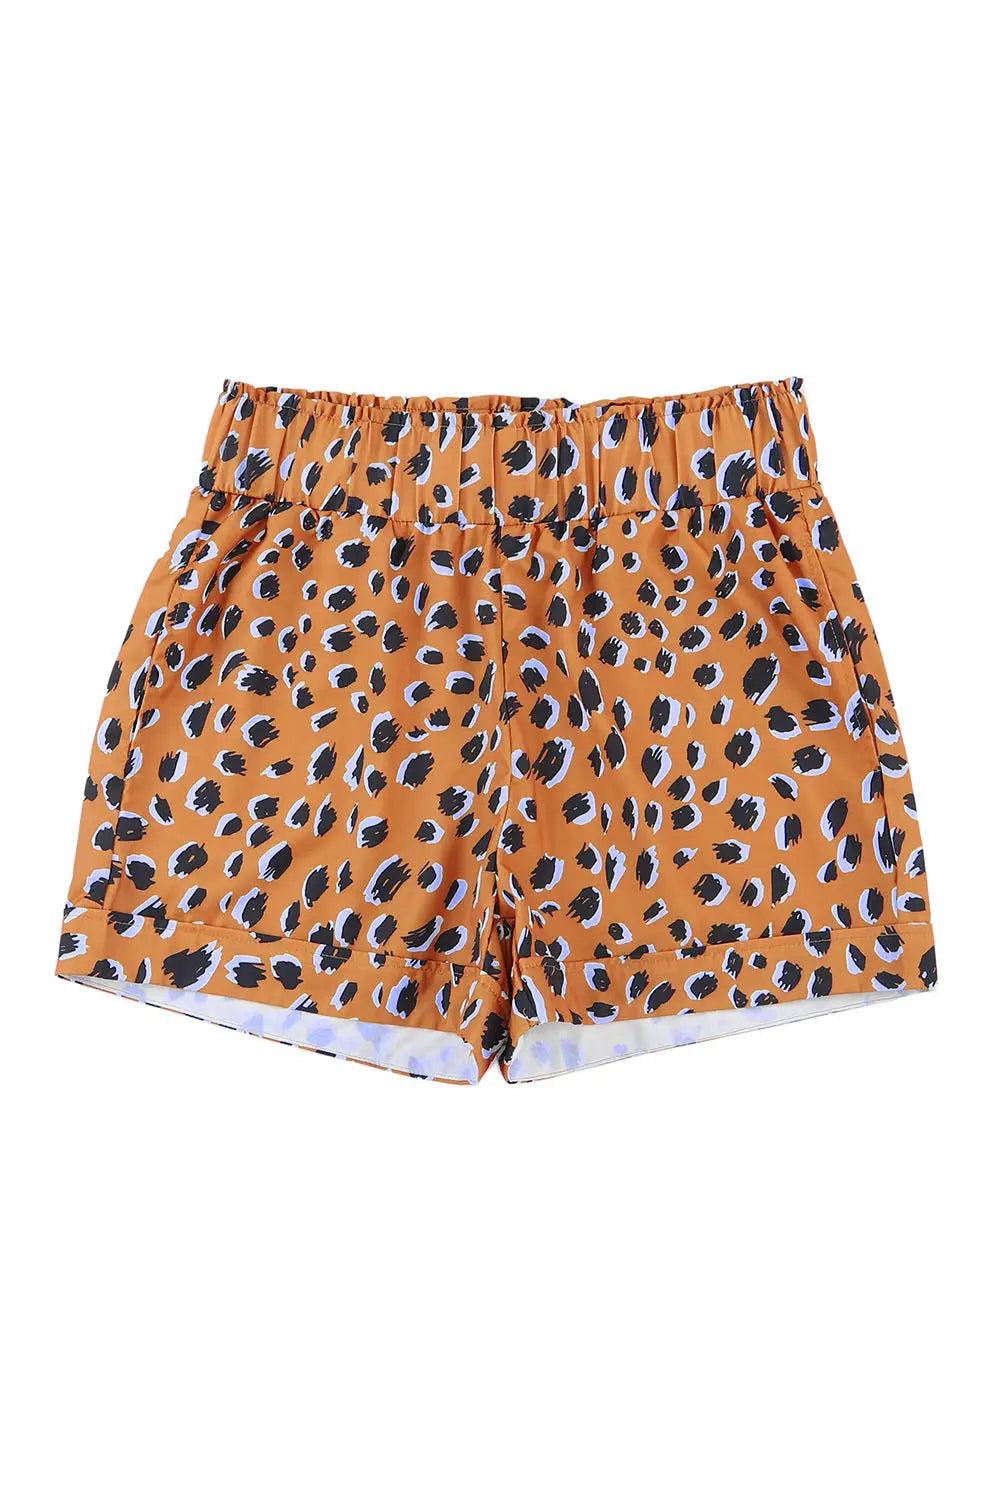 Brown leopard print ruffle elastic waist shorts